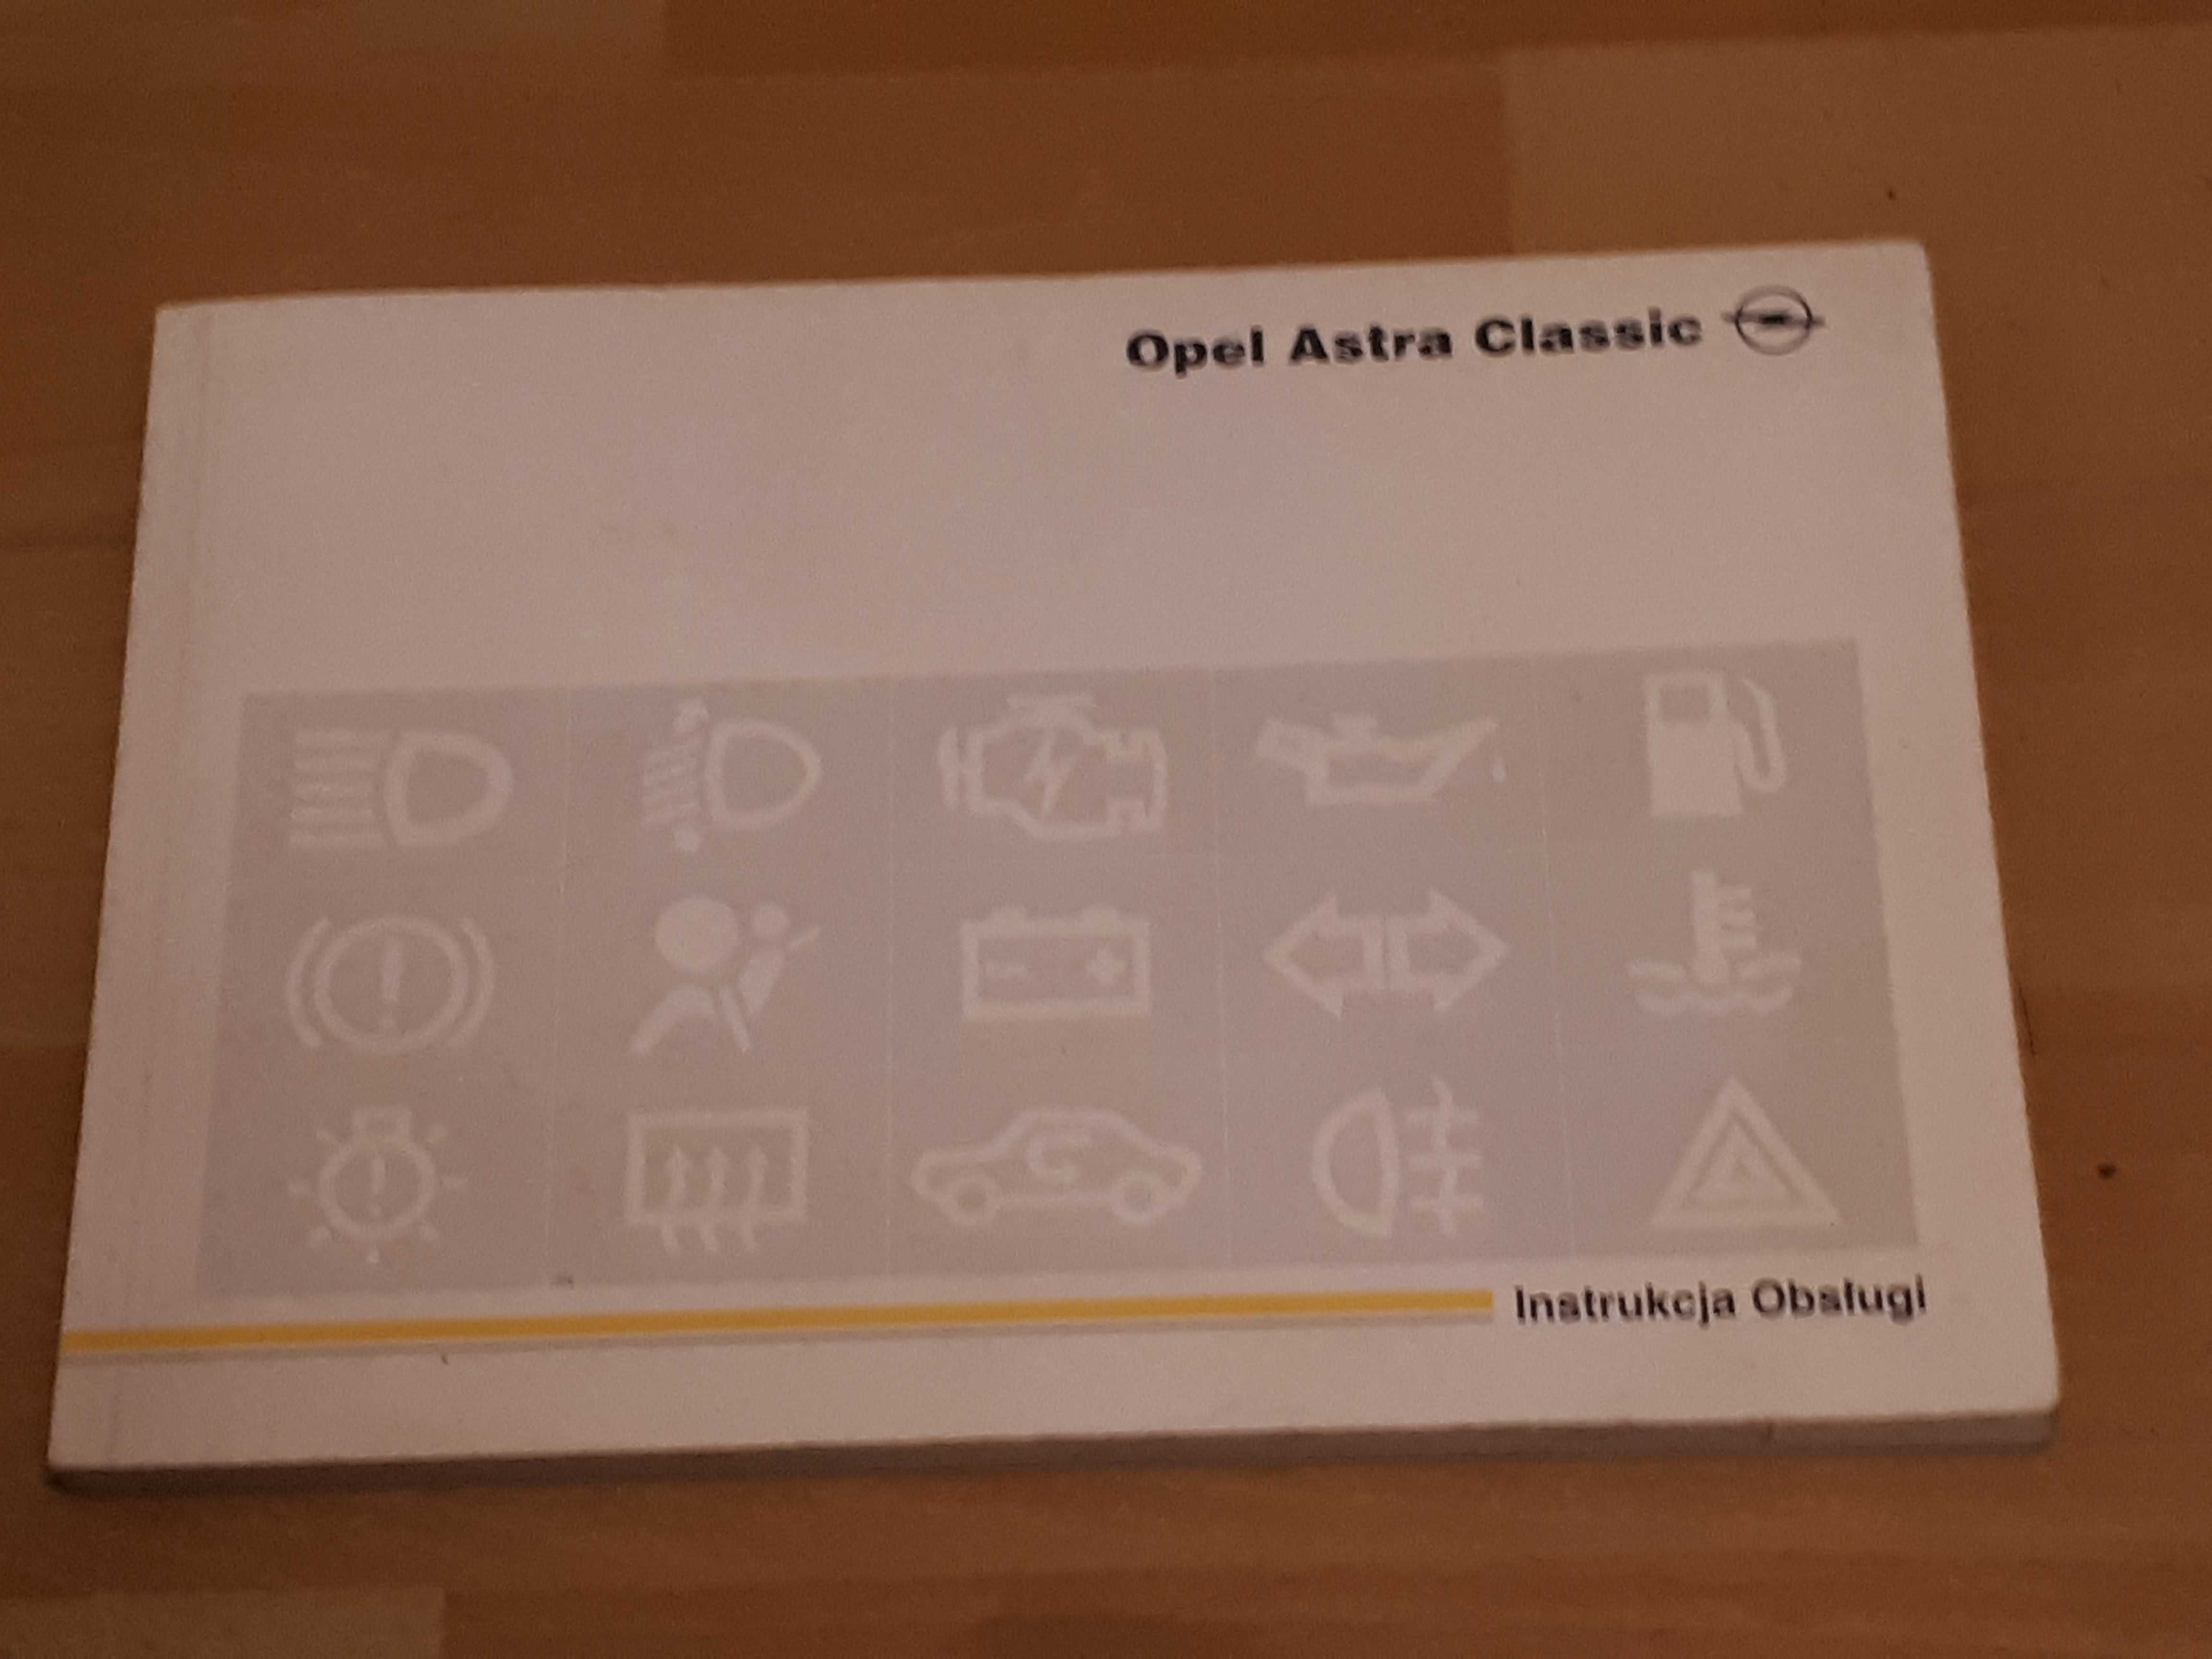 Opel Astra instrukcja obsługi 1995